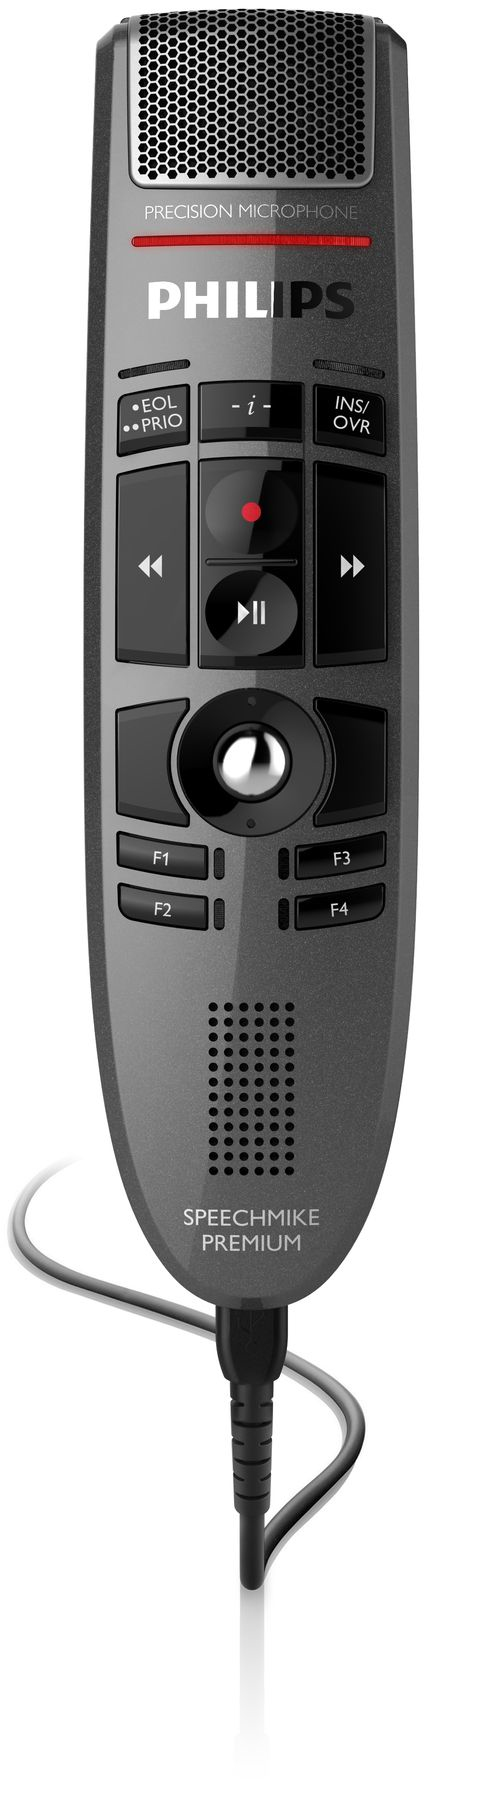 Philips SpeechMike Premium USB-diktatmikrofon